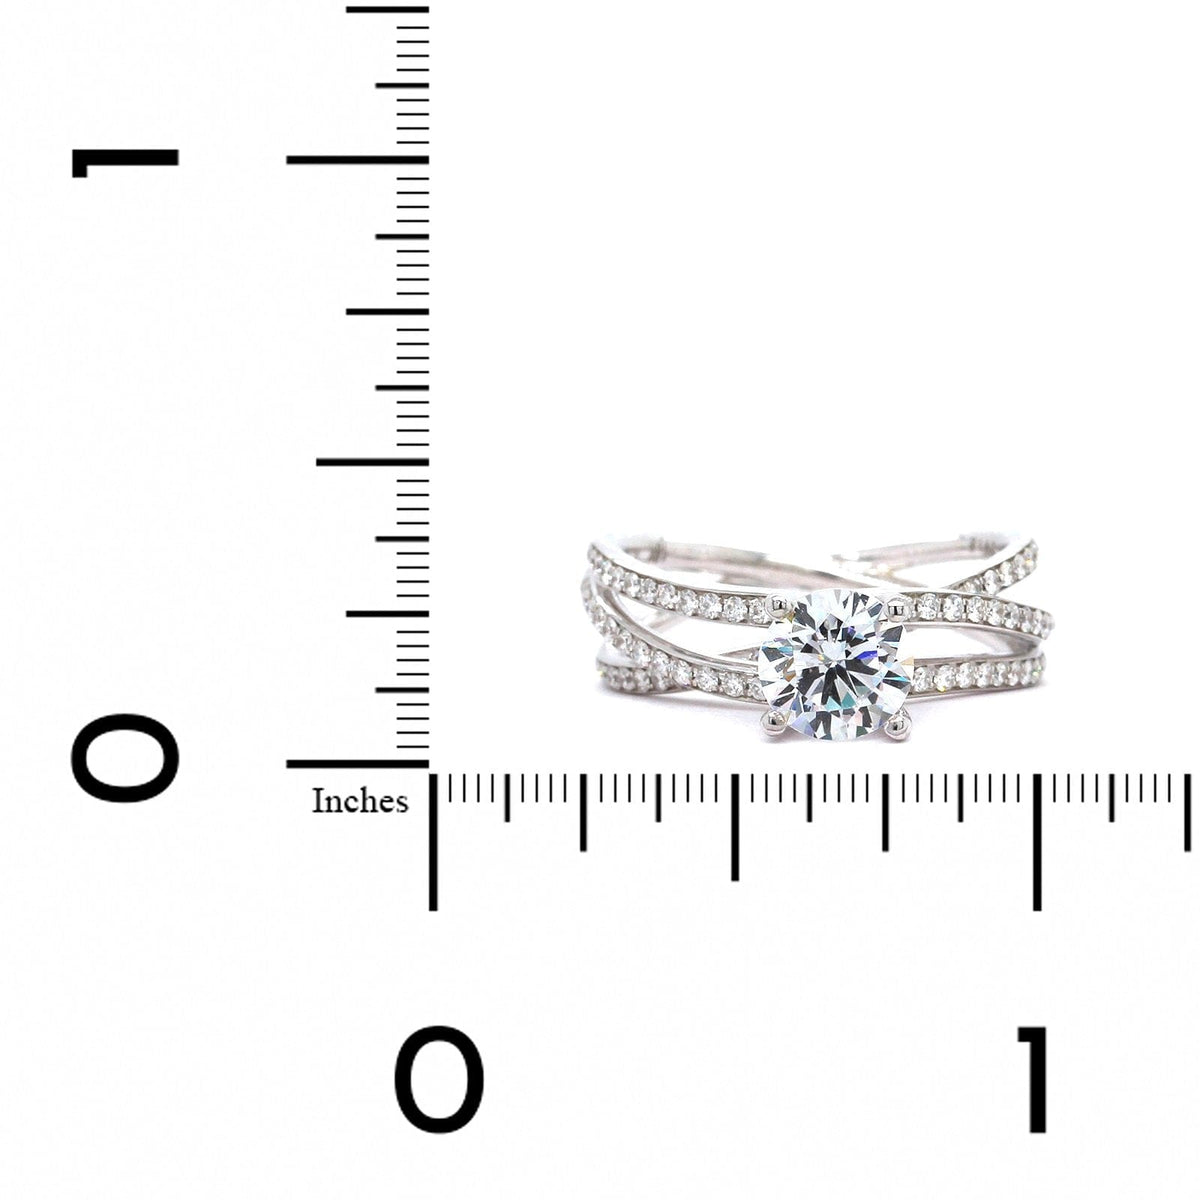 18K White Gold Crossover Diamond Engagement Ring Setting